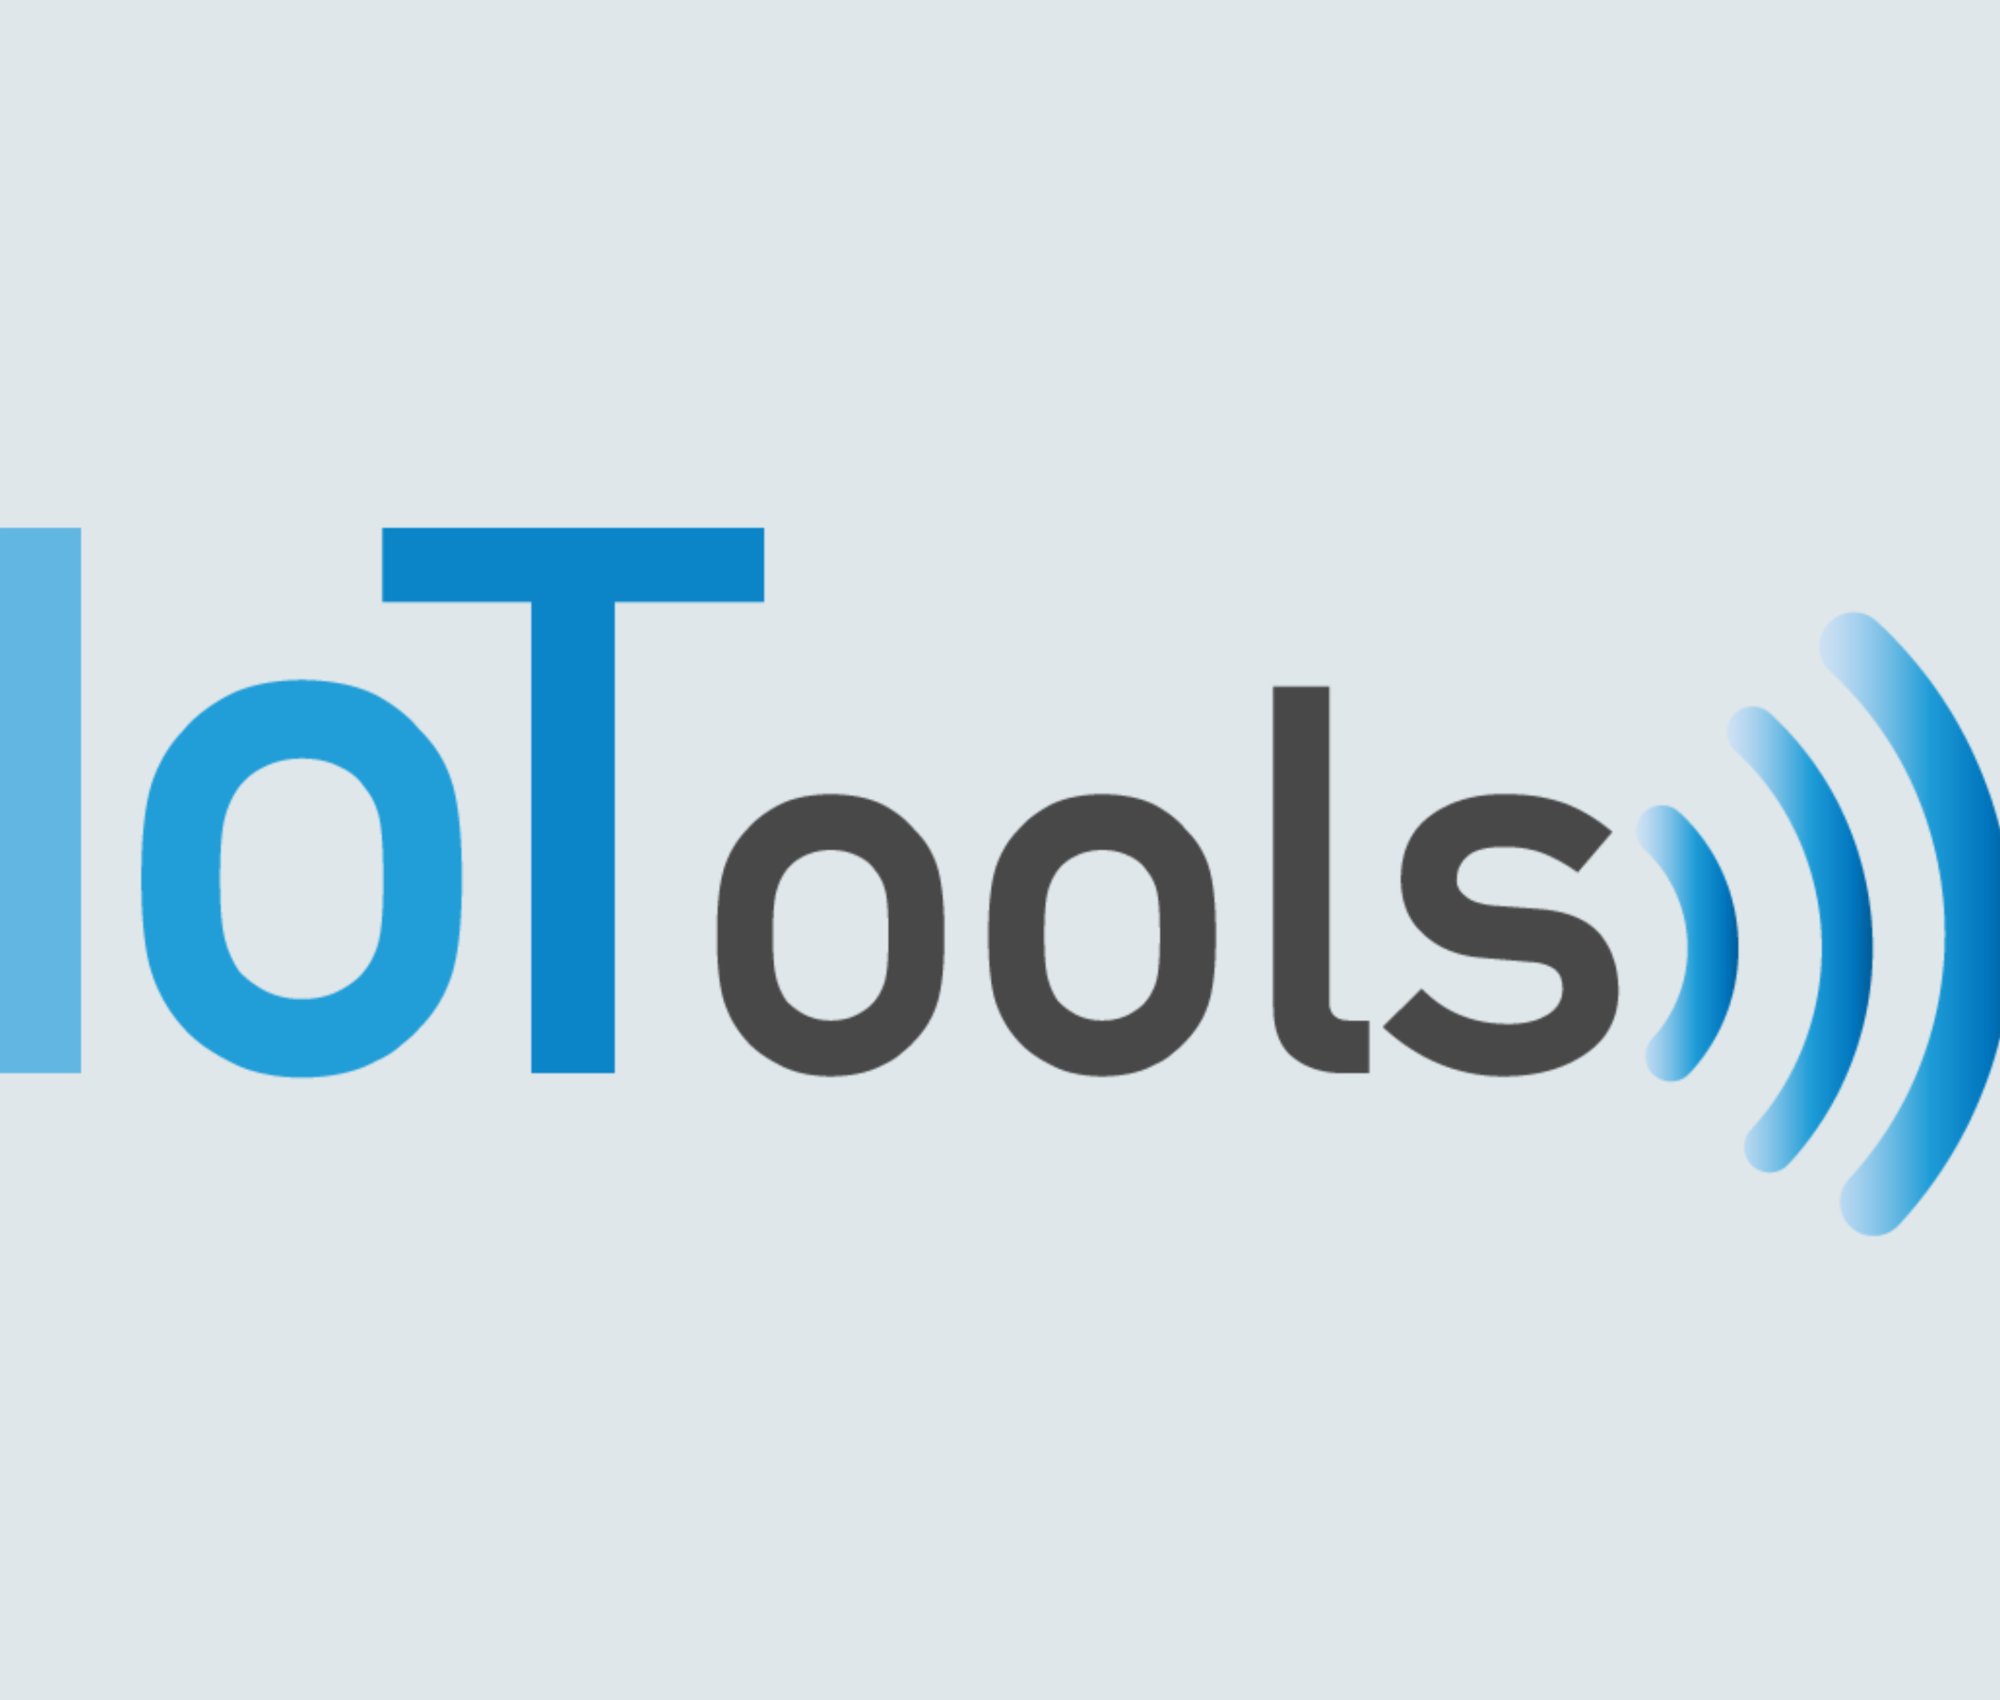 IoTools